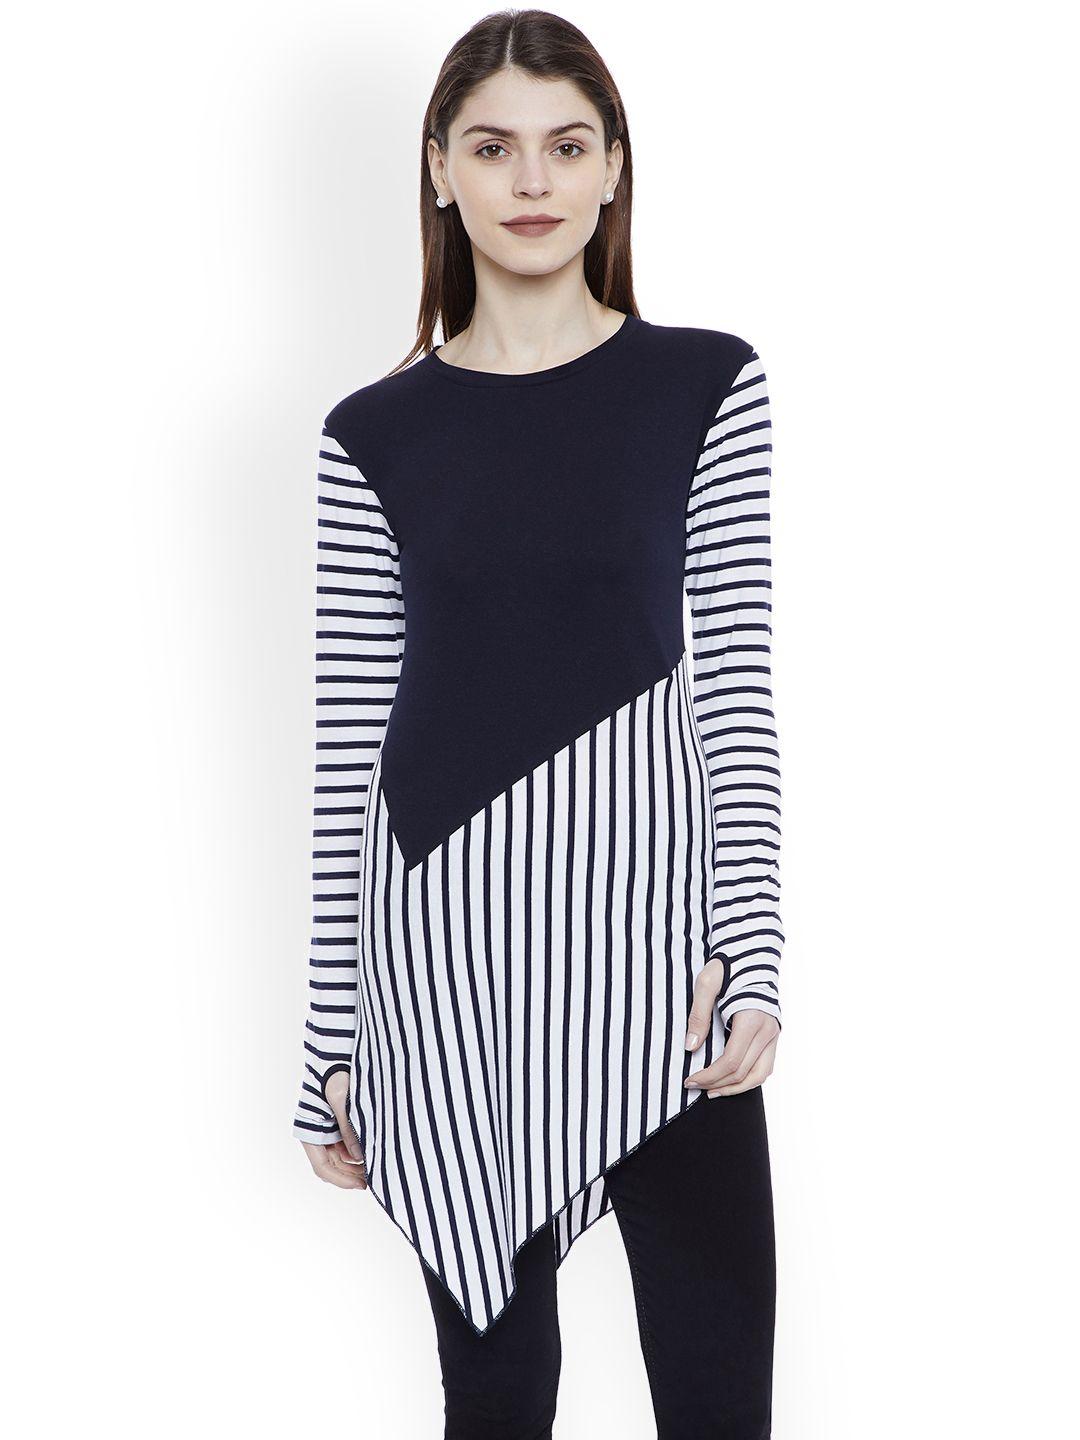 hypernation women white & navy blue striped asymmetrical top